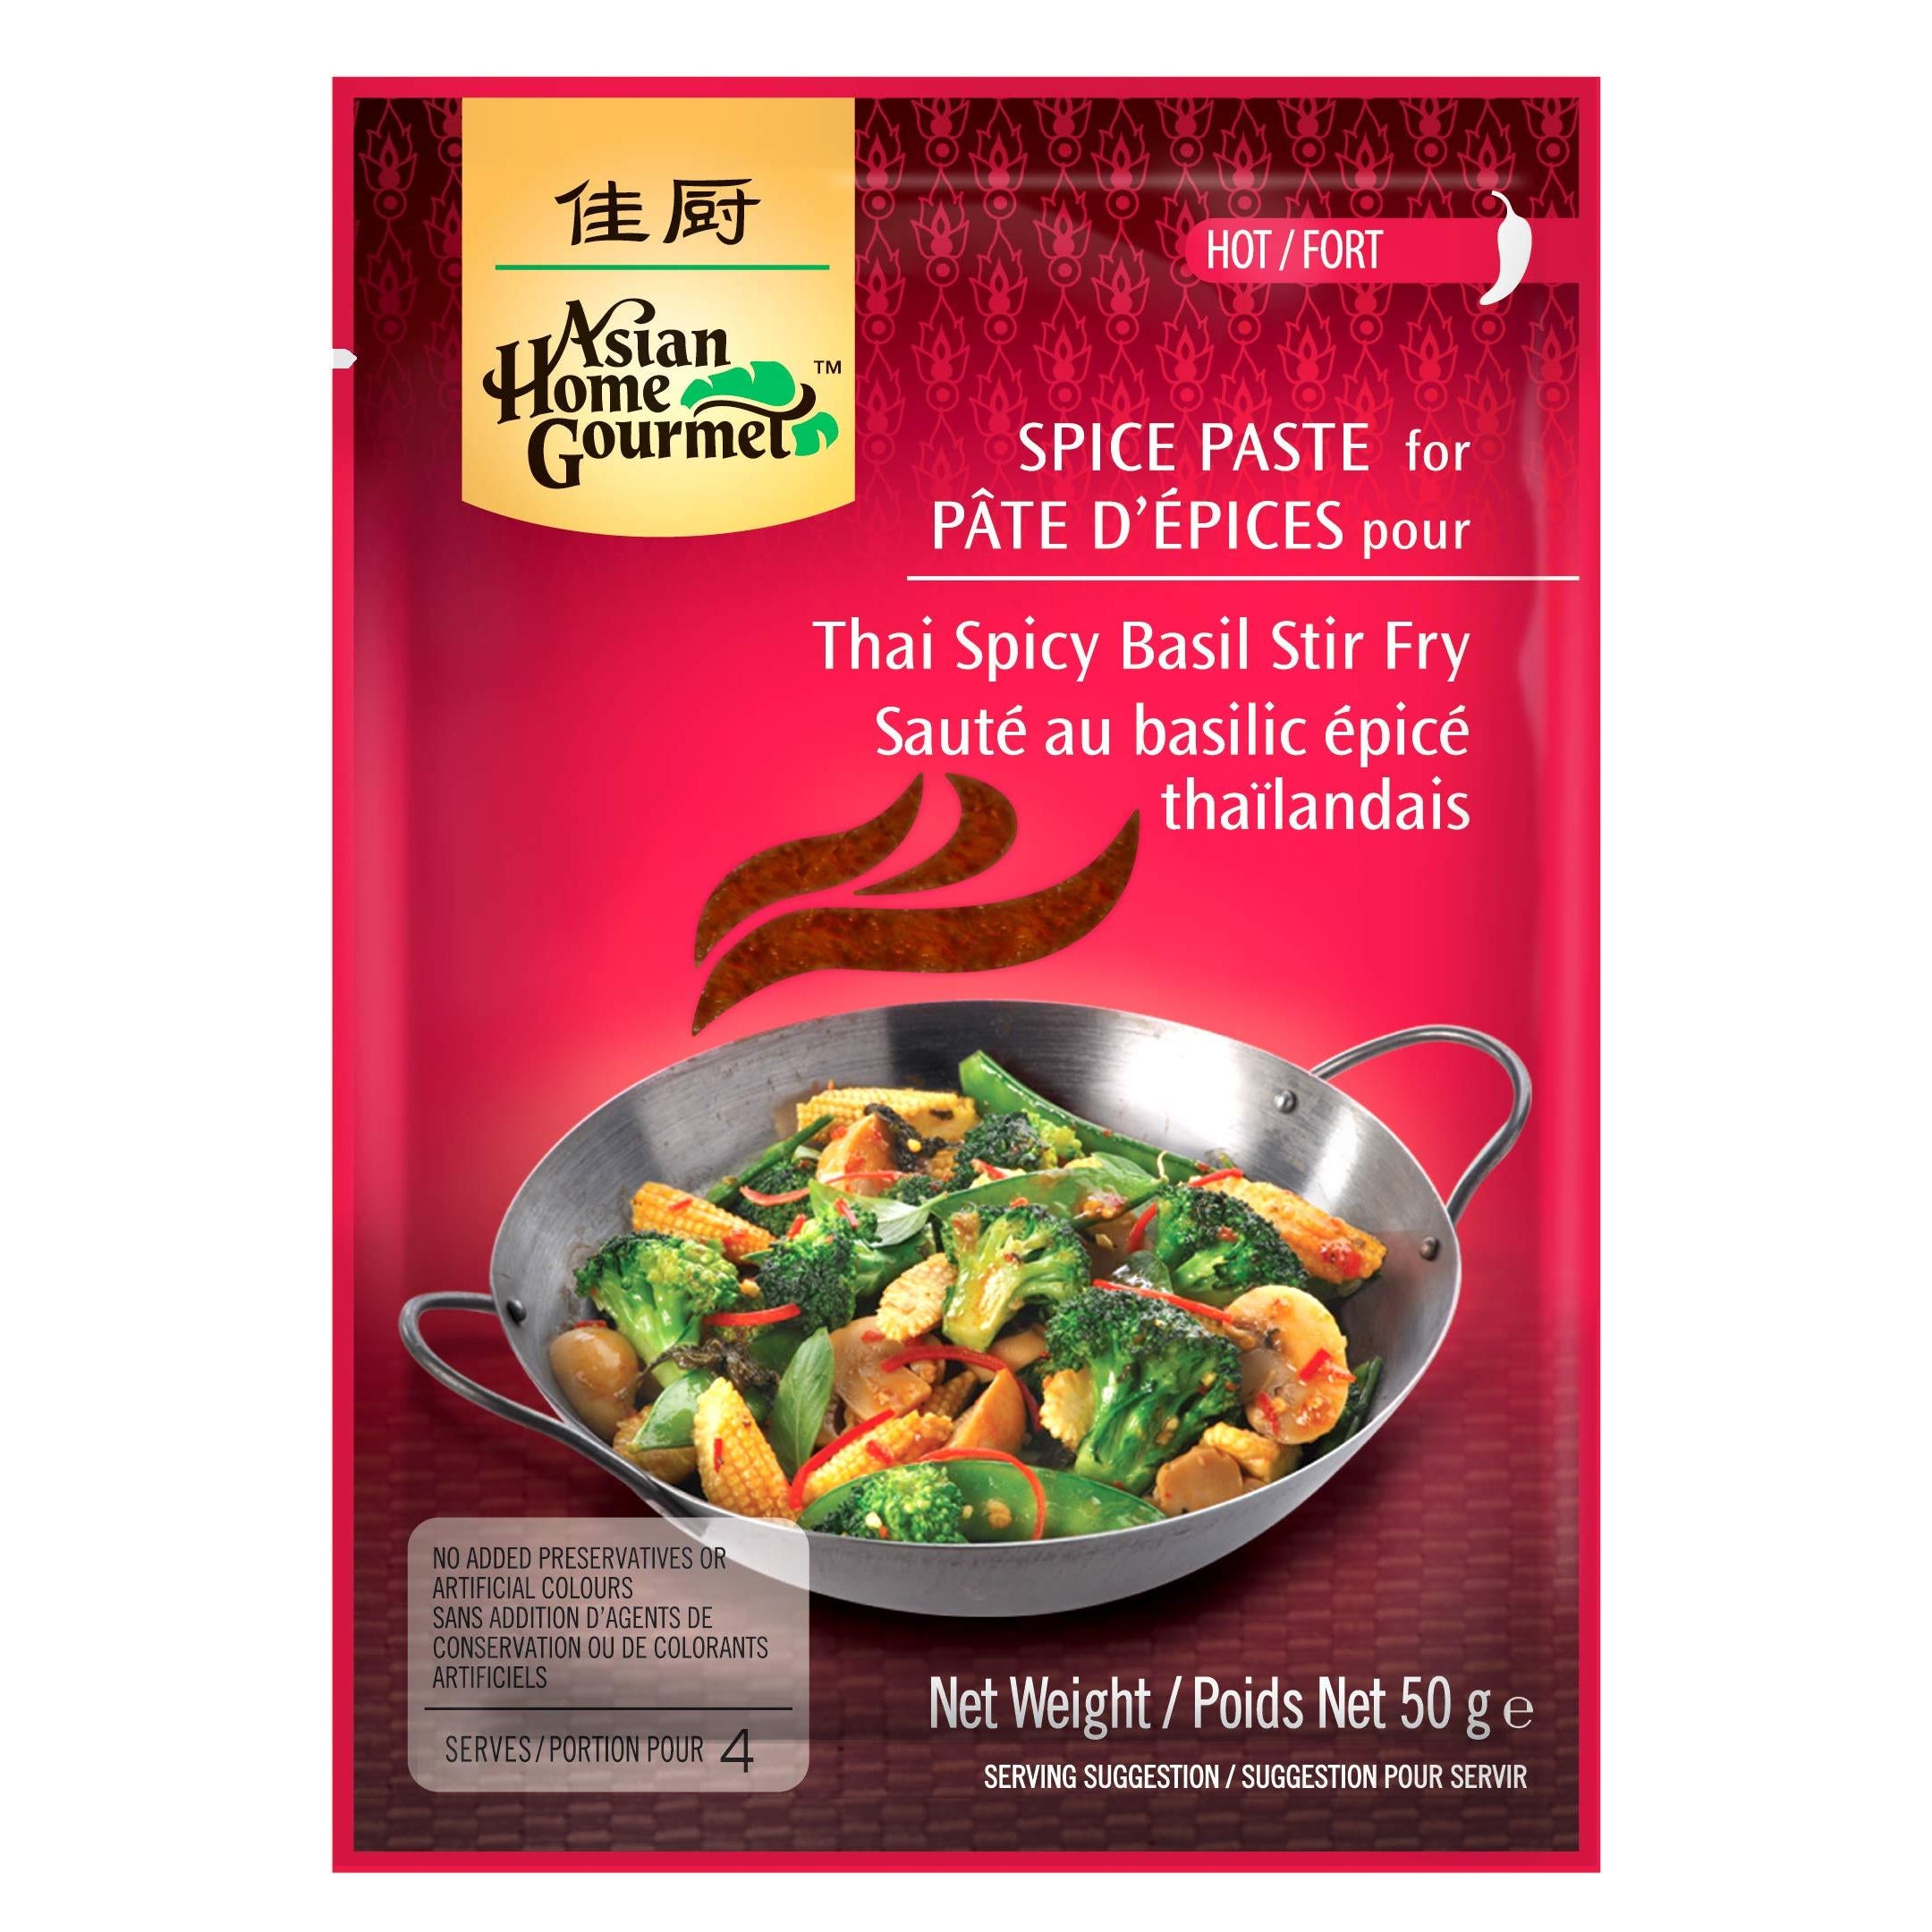 Asian Home Gourmet: Thai Spicy Basil Stir Fry (Pack of 12)